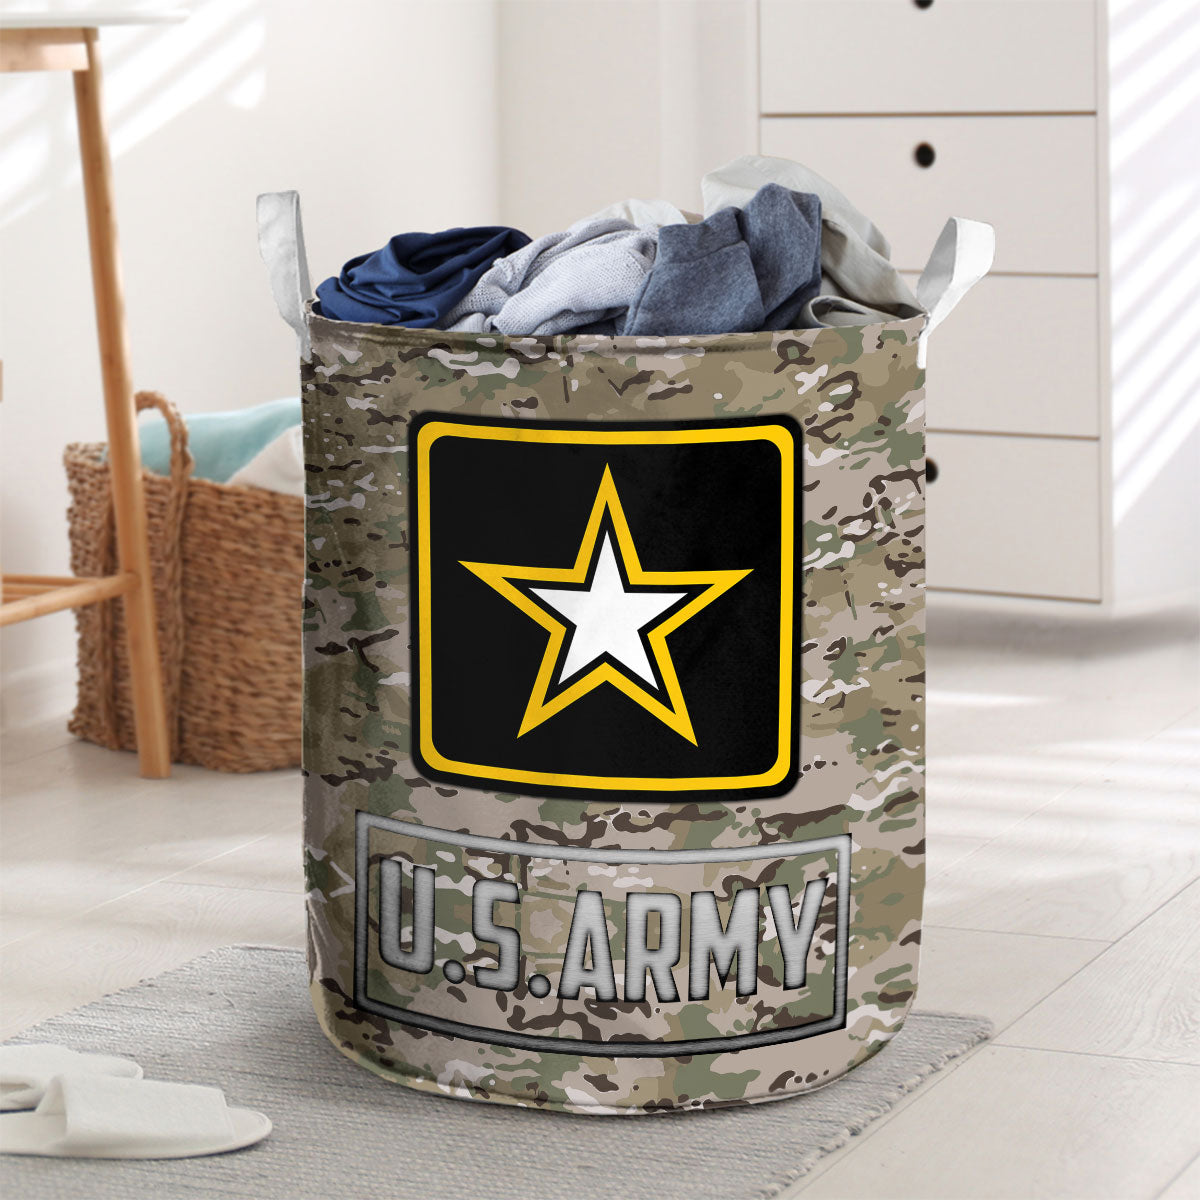 U.S. Army Camouflage Laundry Basket